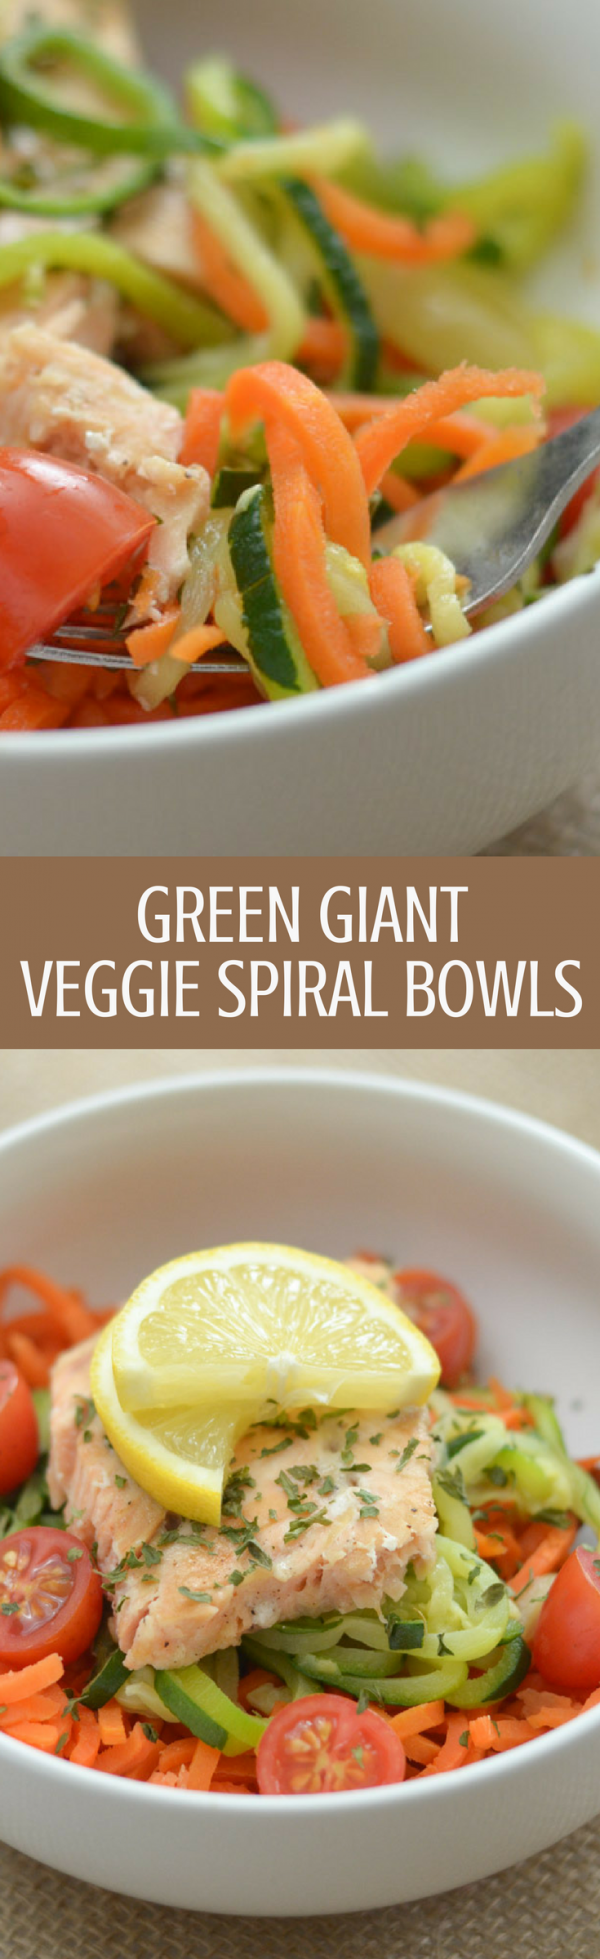 Green Giant Veggie Spiral Bowls